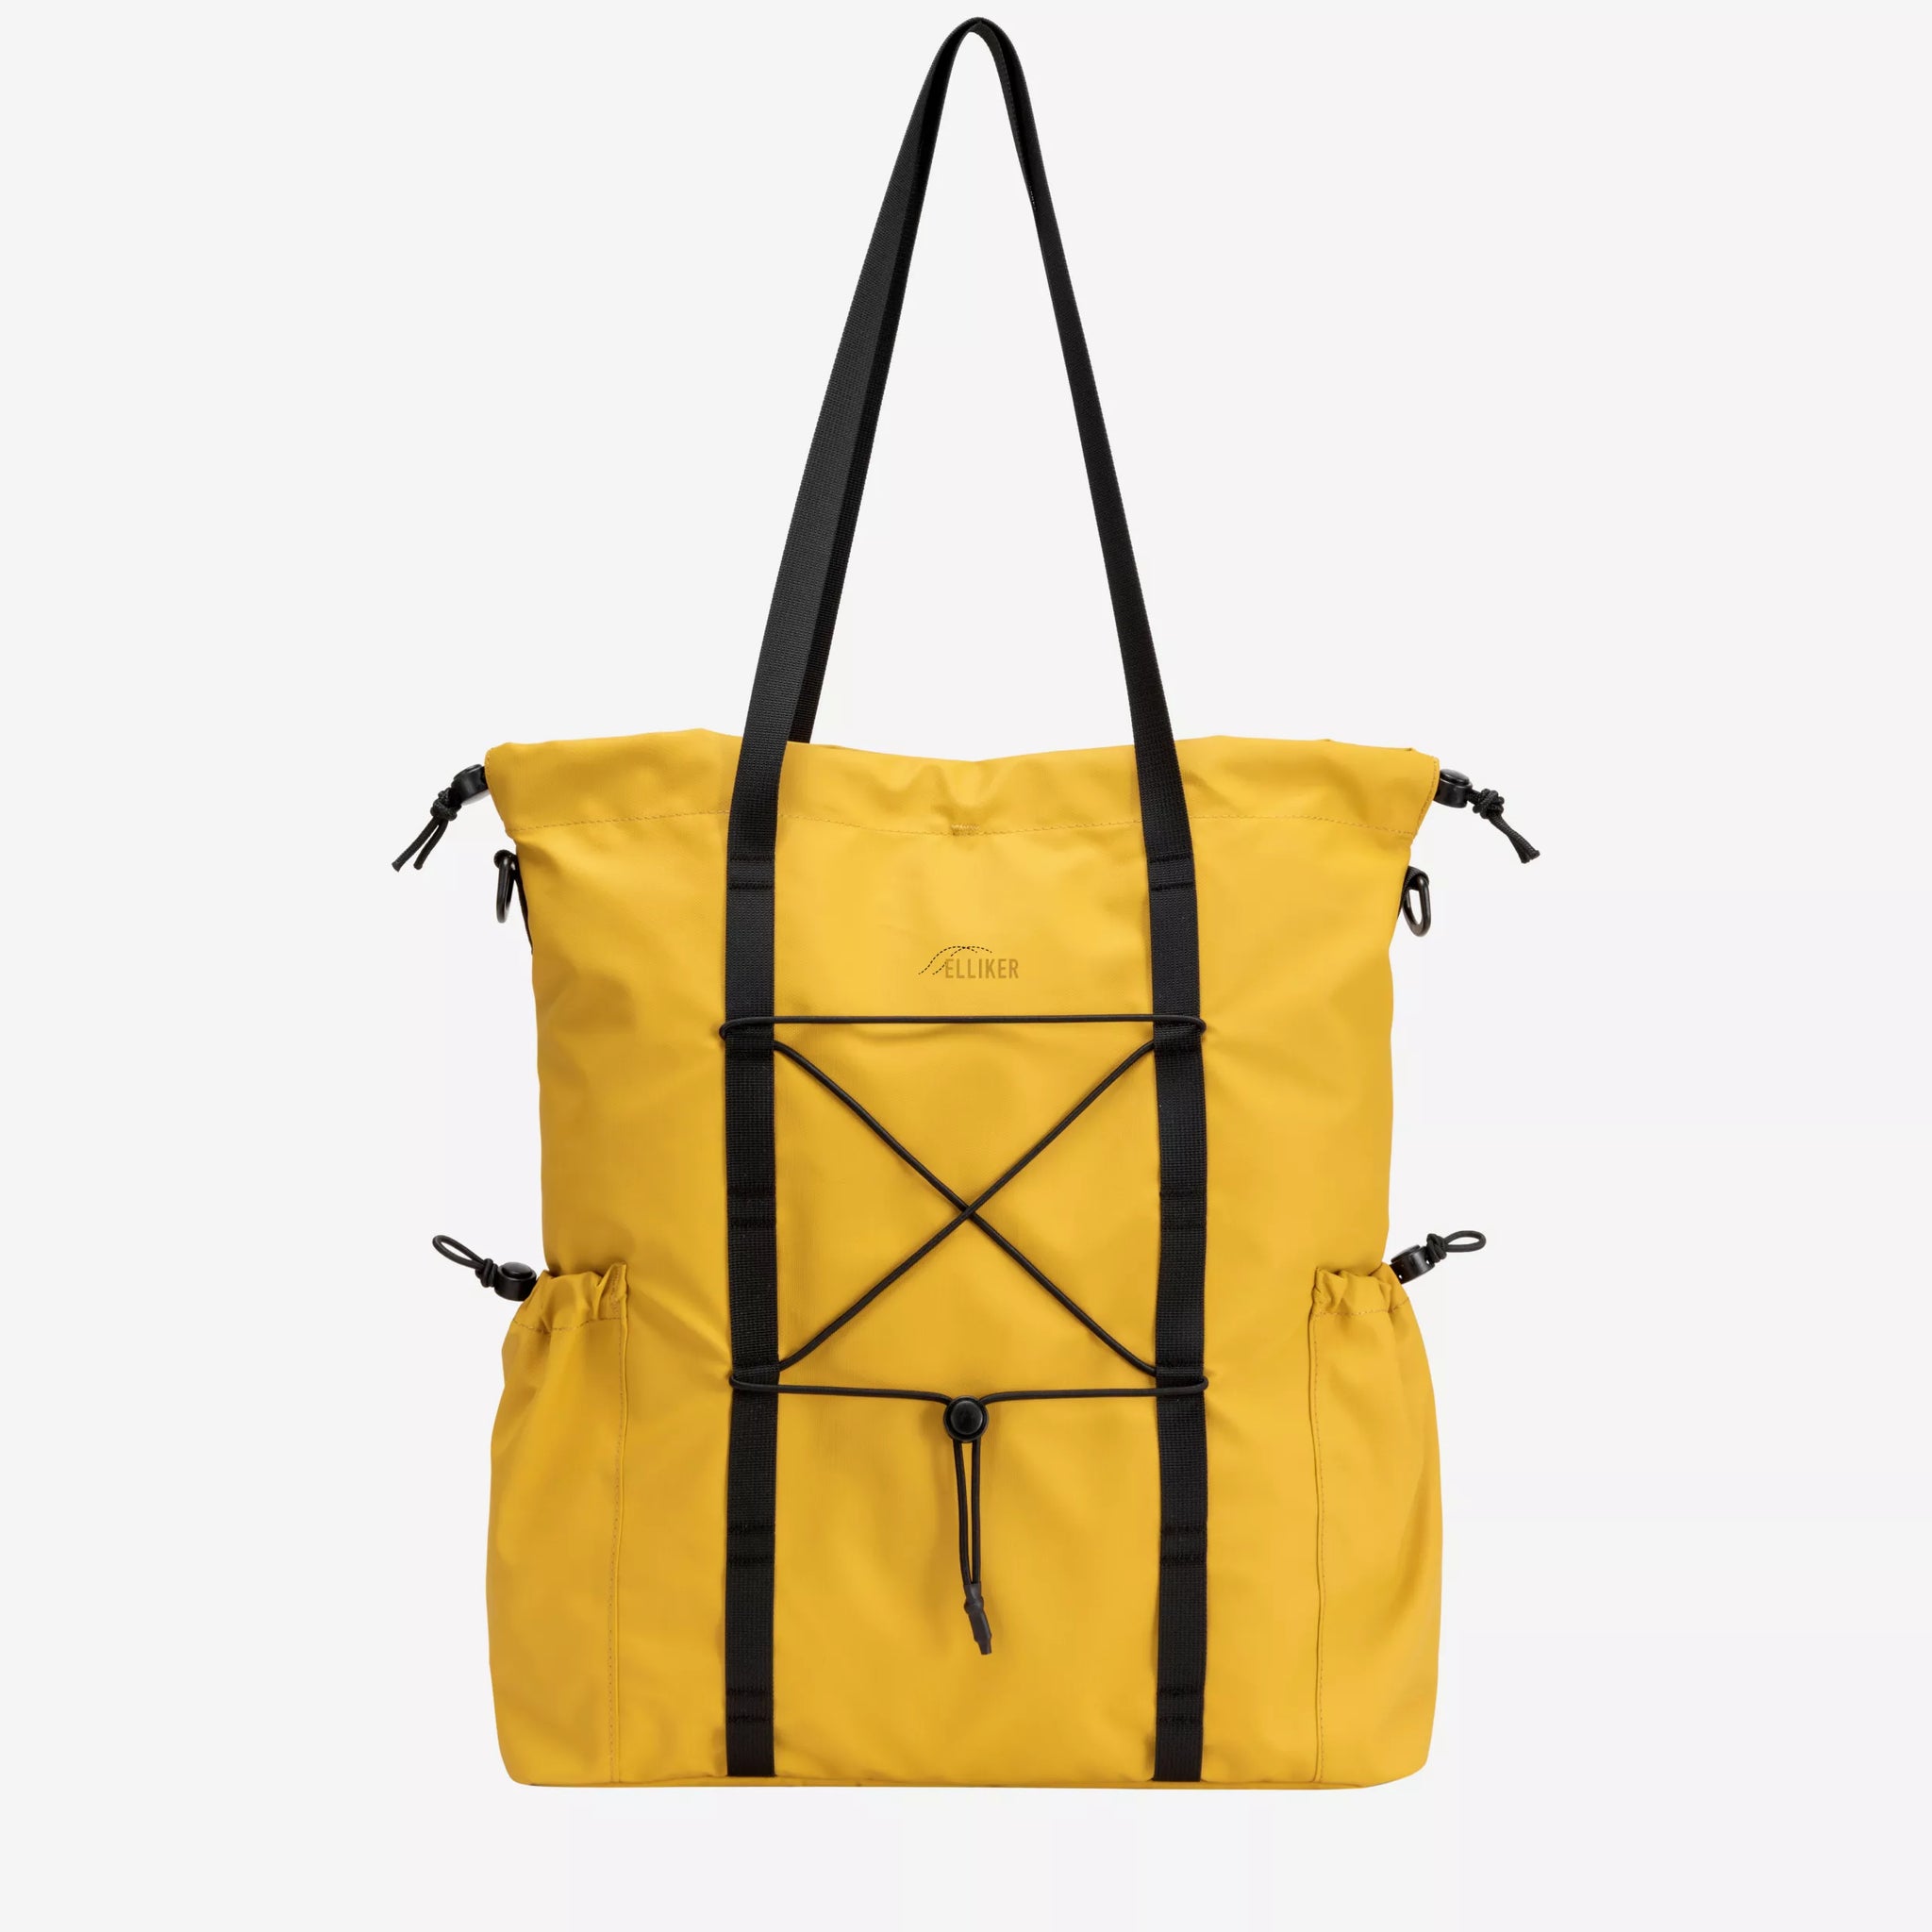 Elliker Carston Tote Bag 13L - Mustard